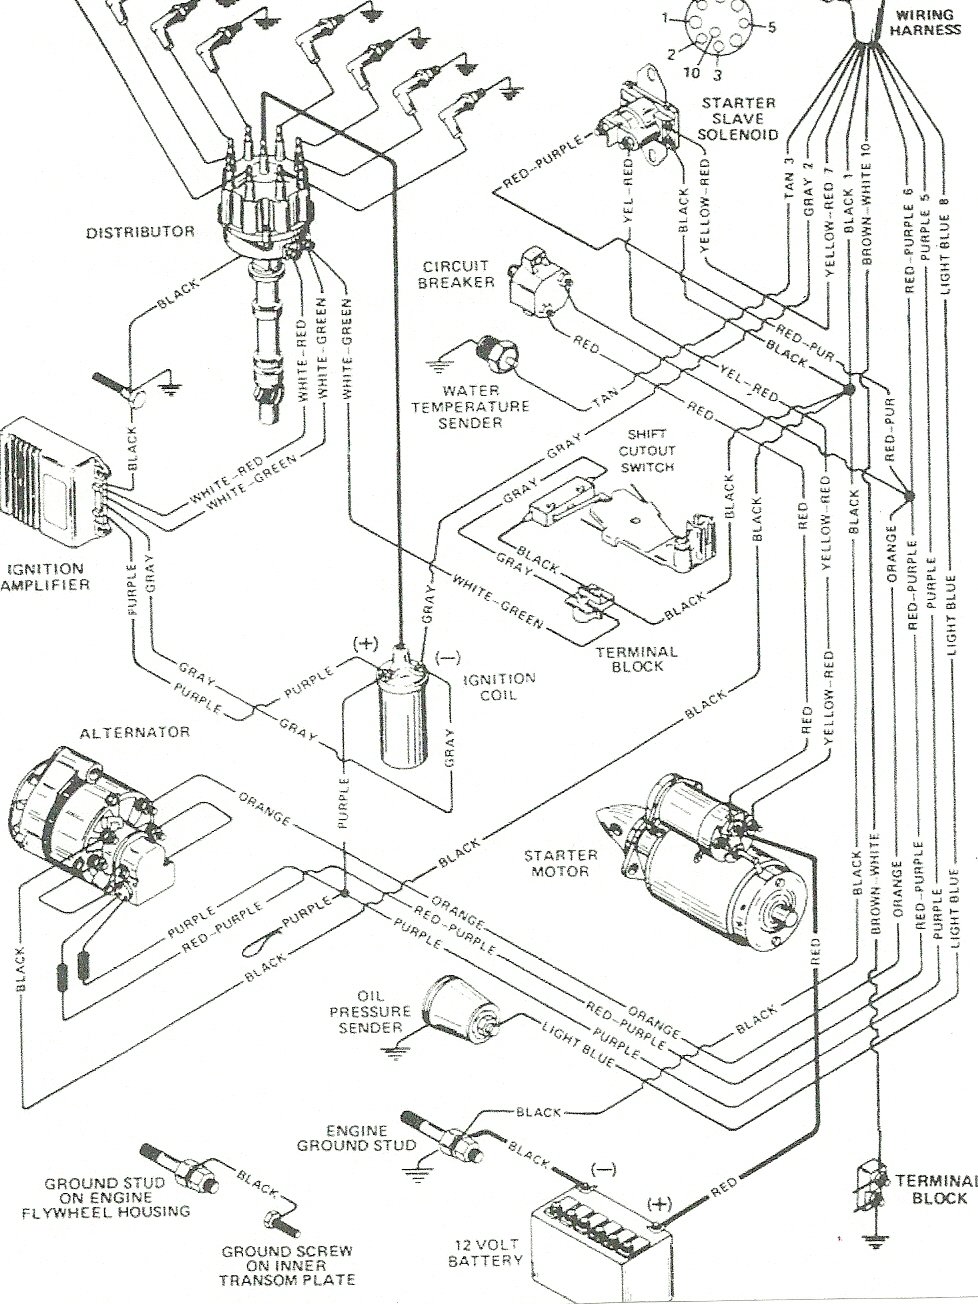 2004 sea ray sunsport wiring diagram